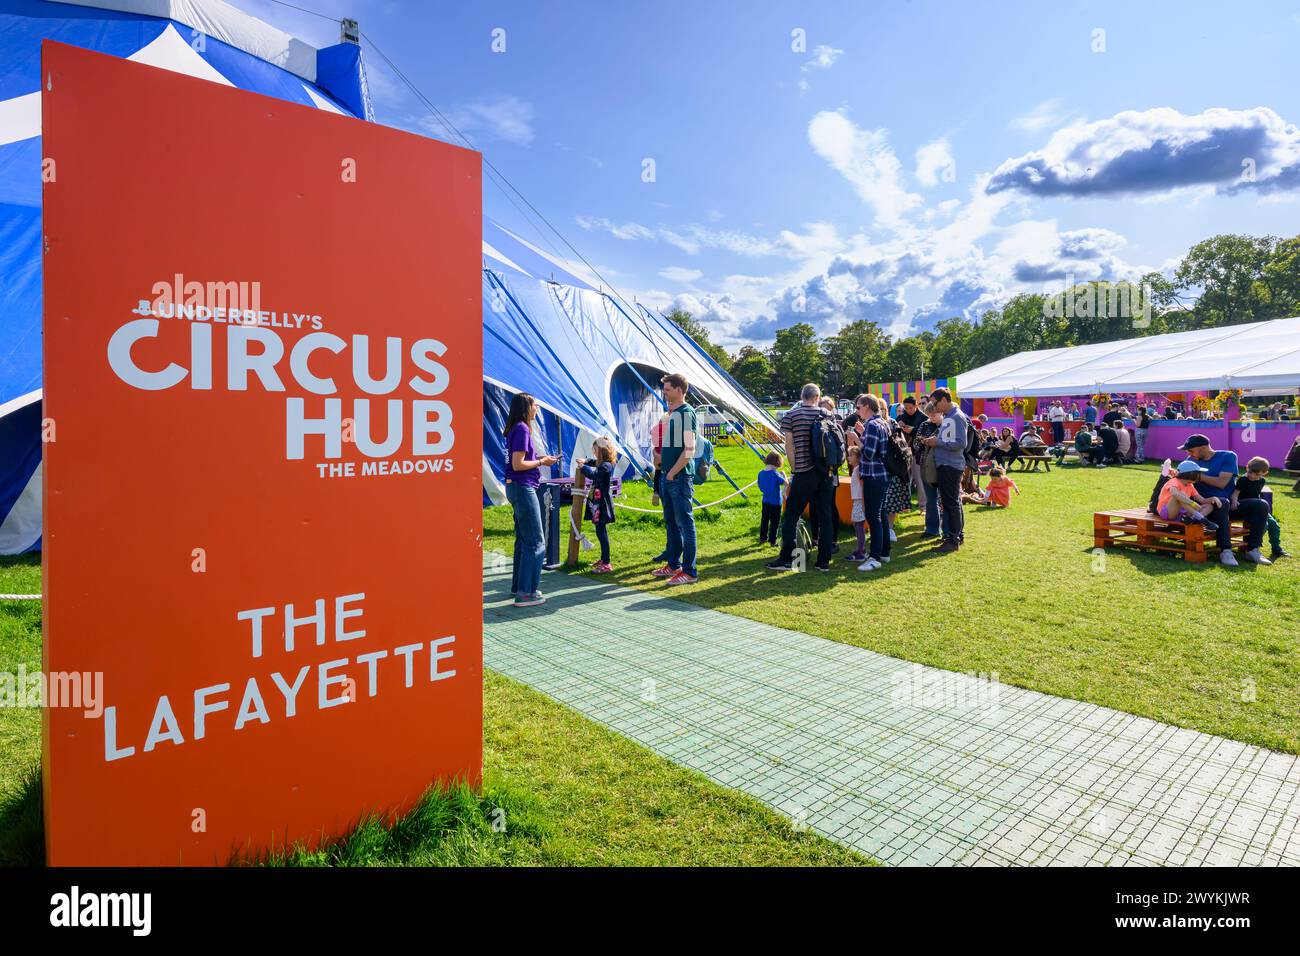 Underbelly Circus Hub , Meadows, Edinburgh Fringe Festival, The Lafayette Foto Stock